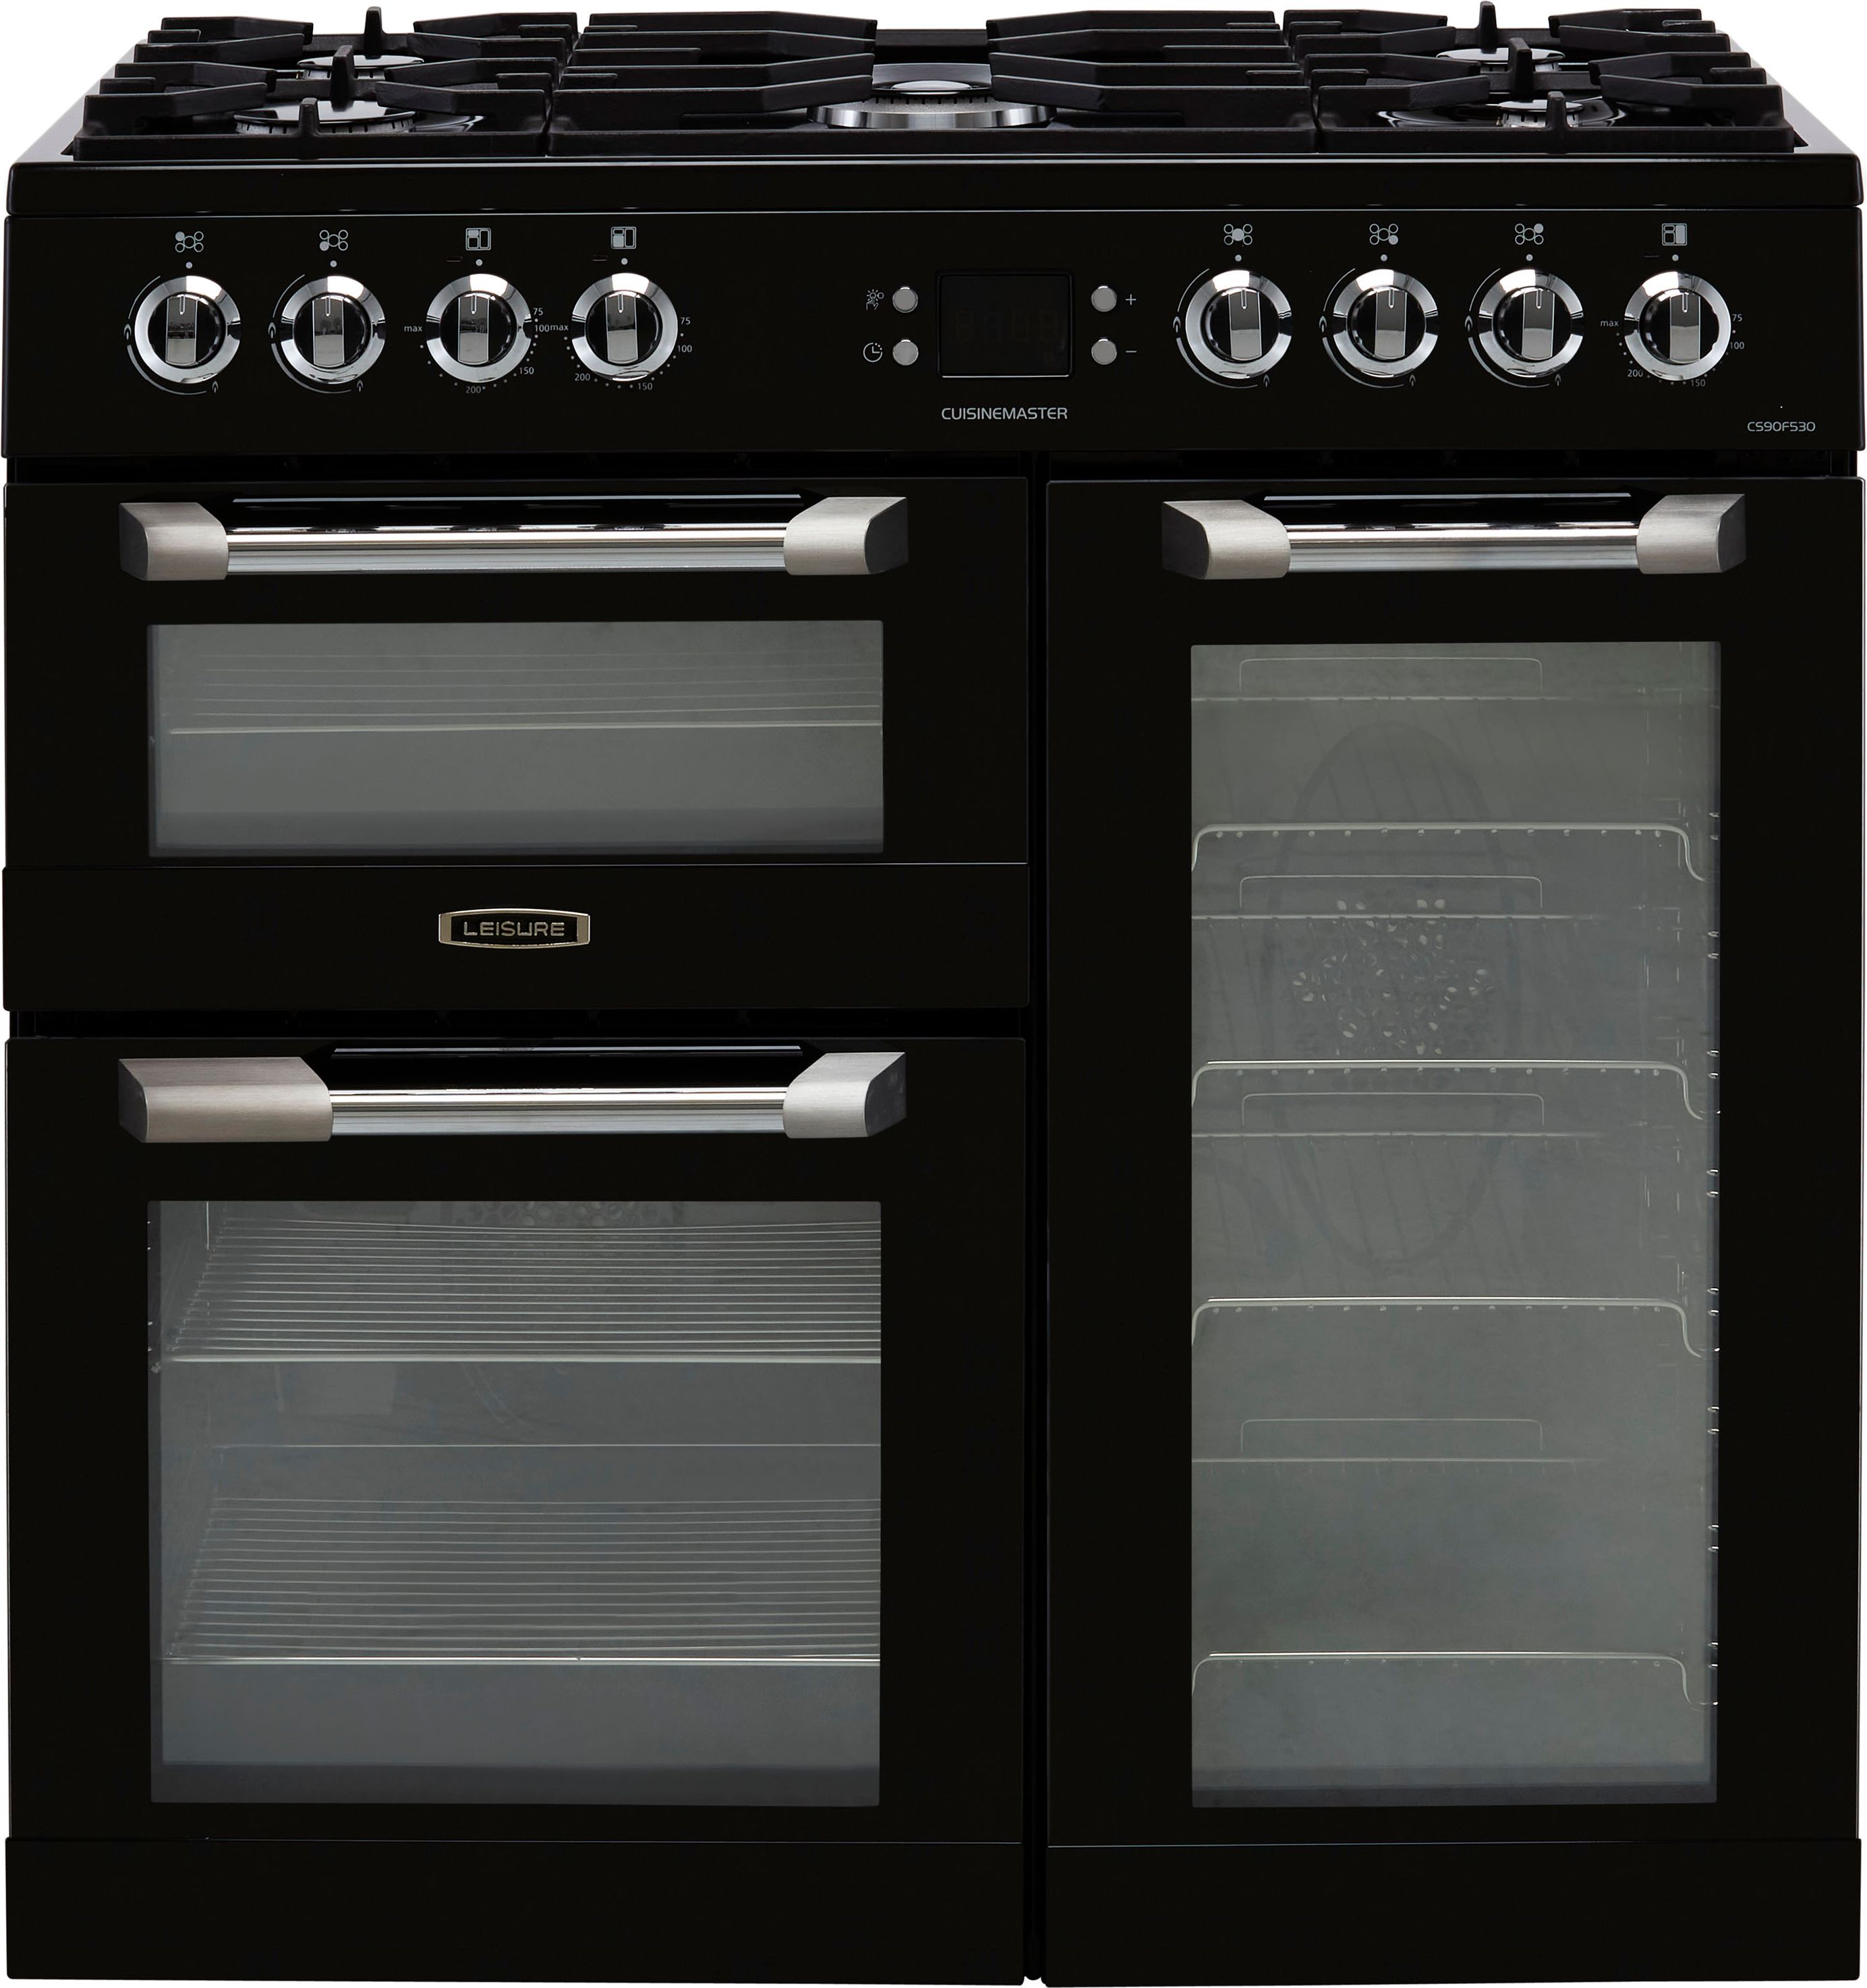 Leisure Cuisinemaster CS90F530K 90cm Dual Fuel Range Cooker - Black - A/A/A Rated, Black